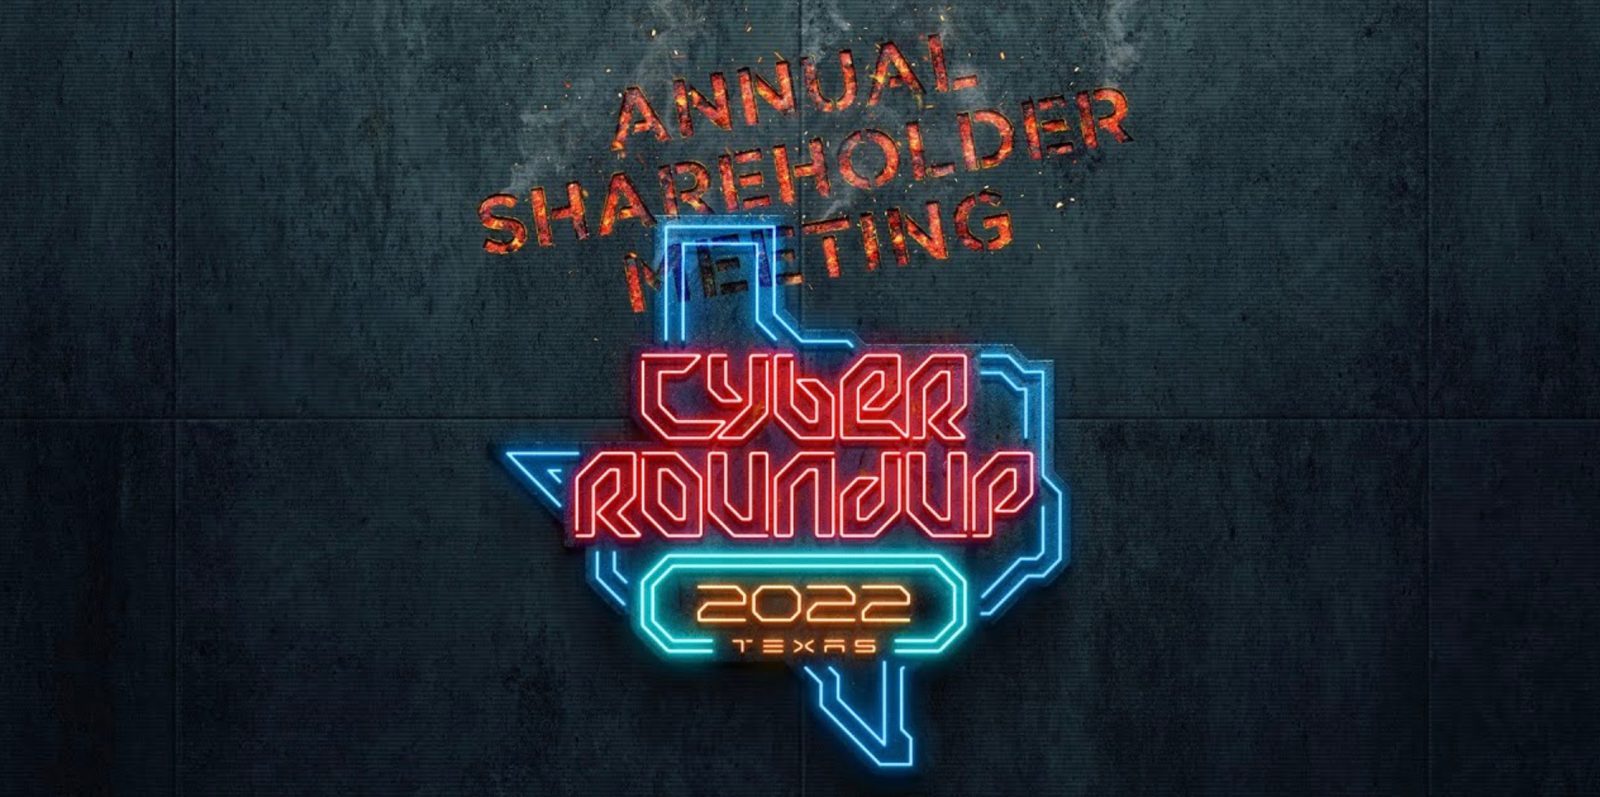 Tesla Cyber Roundup shareholder meeting